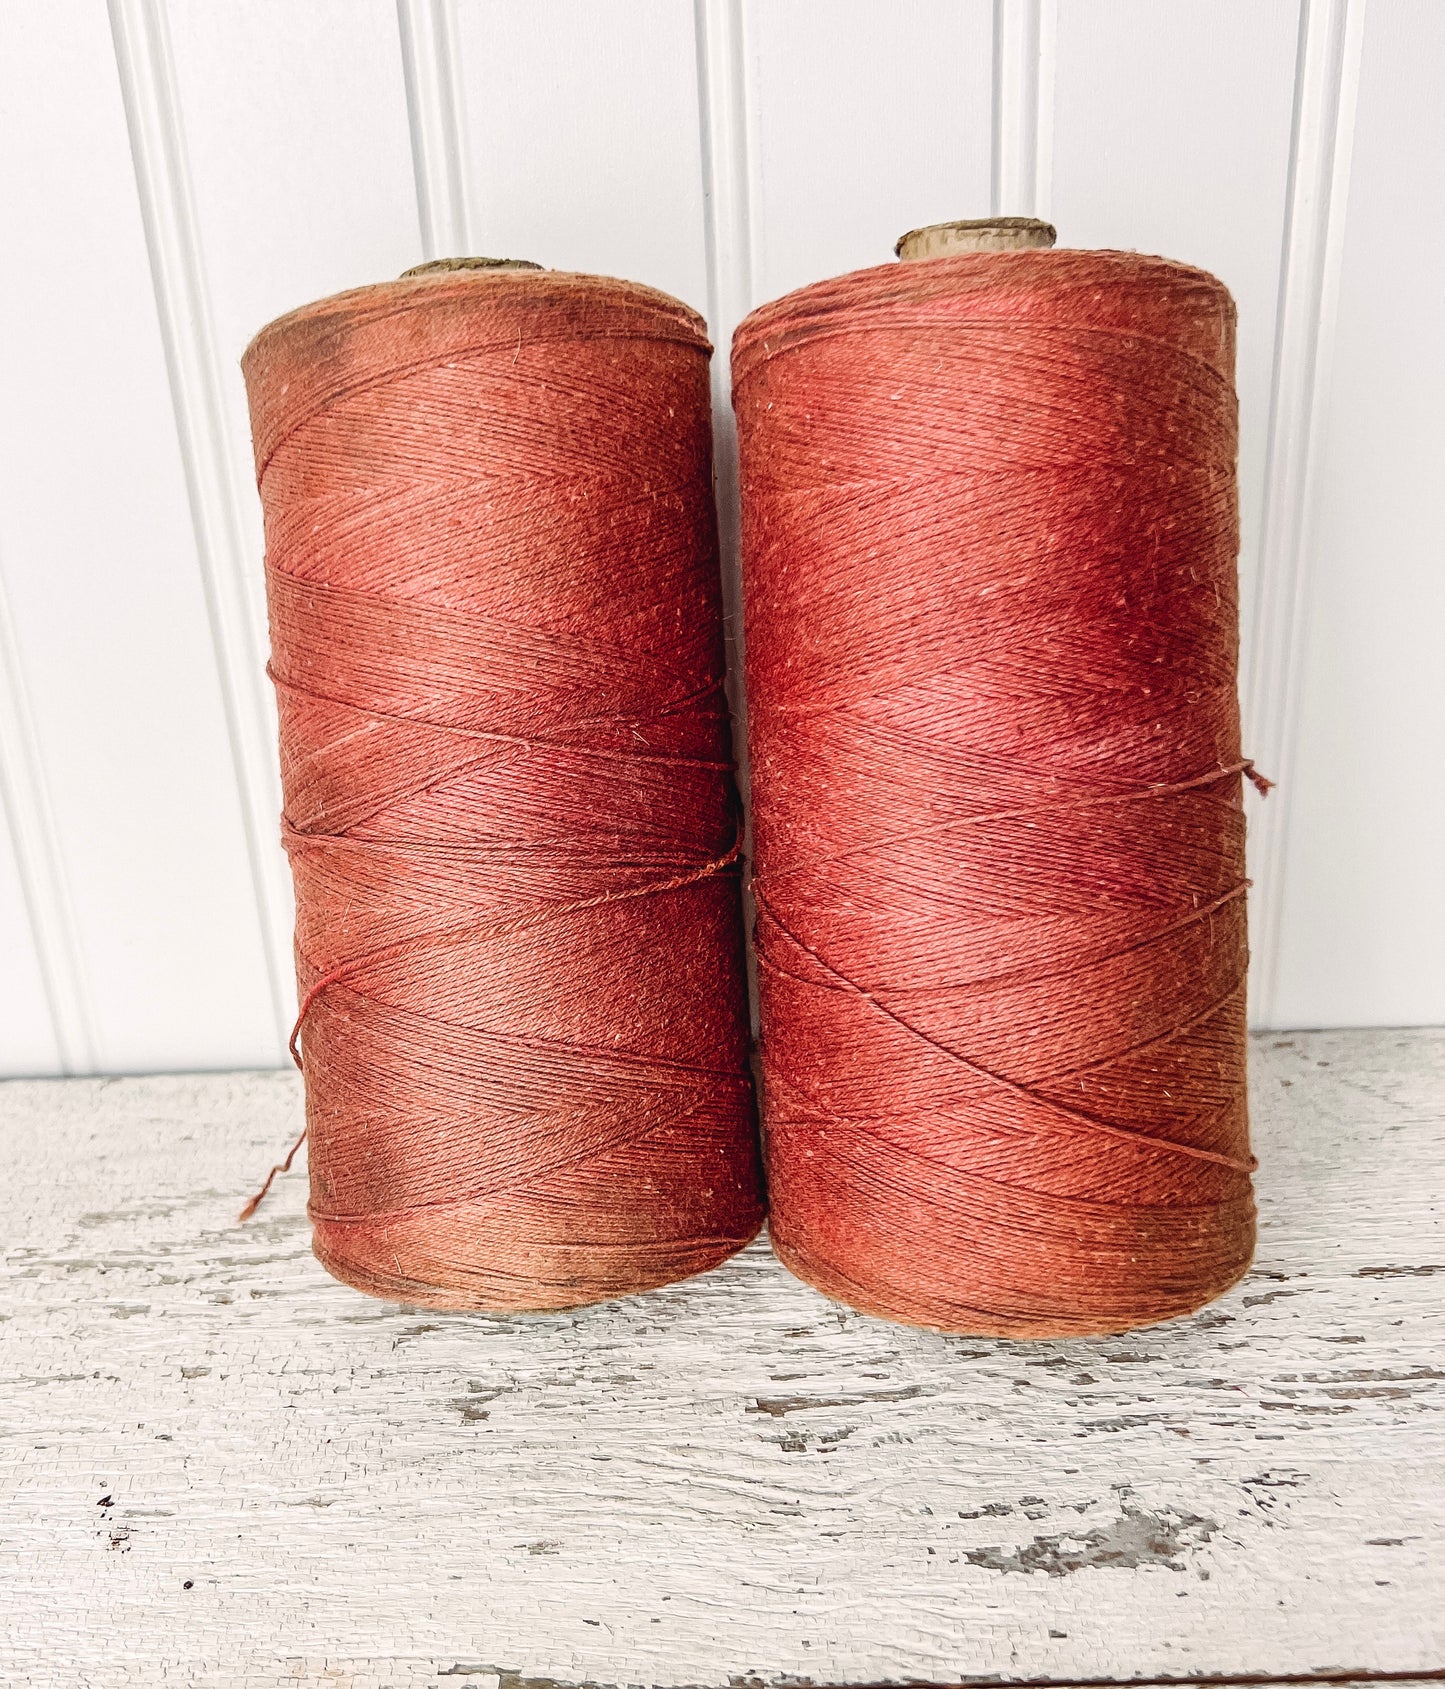 Vintage Red Thread (set of 2)